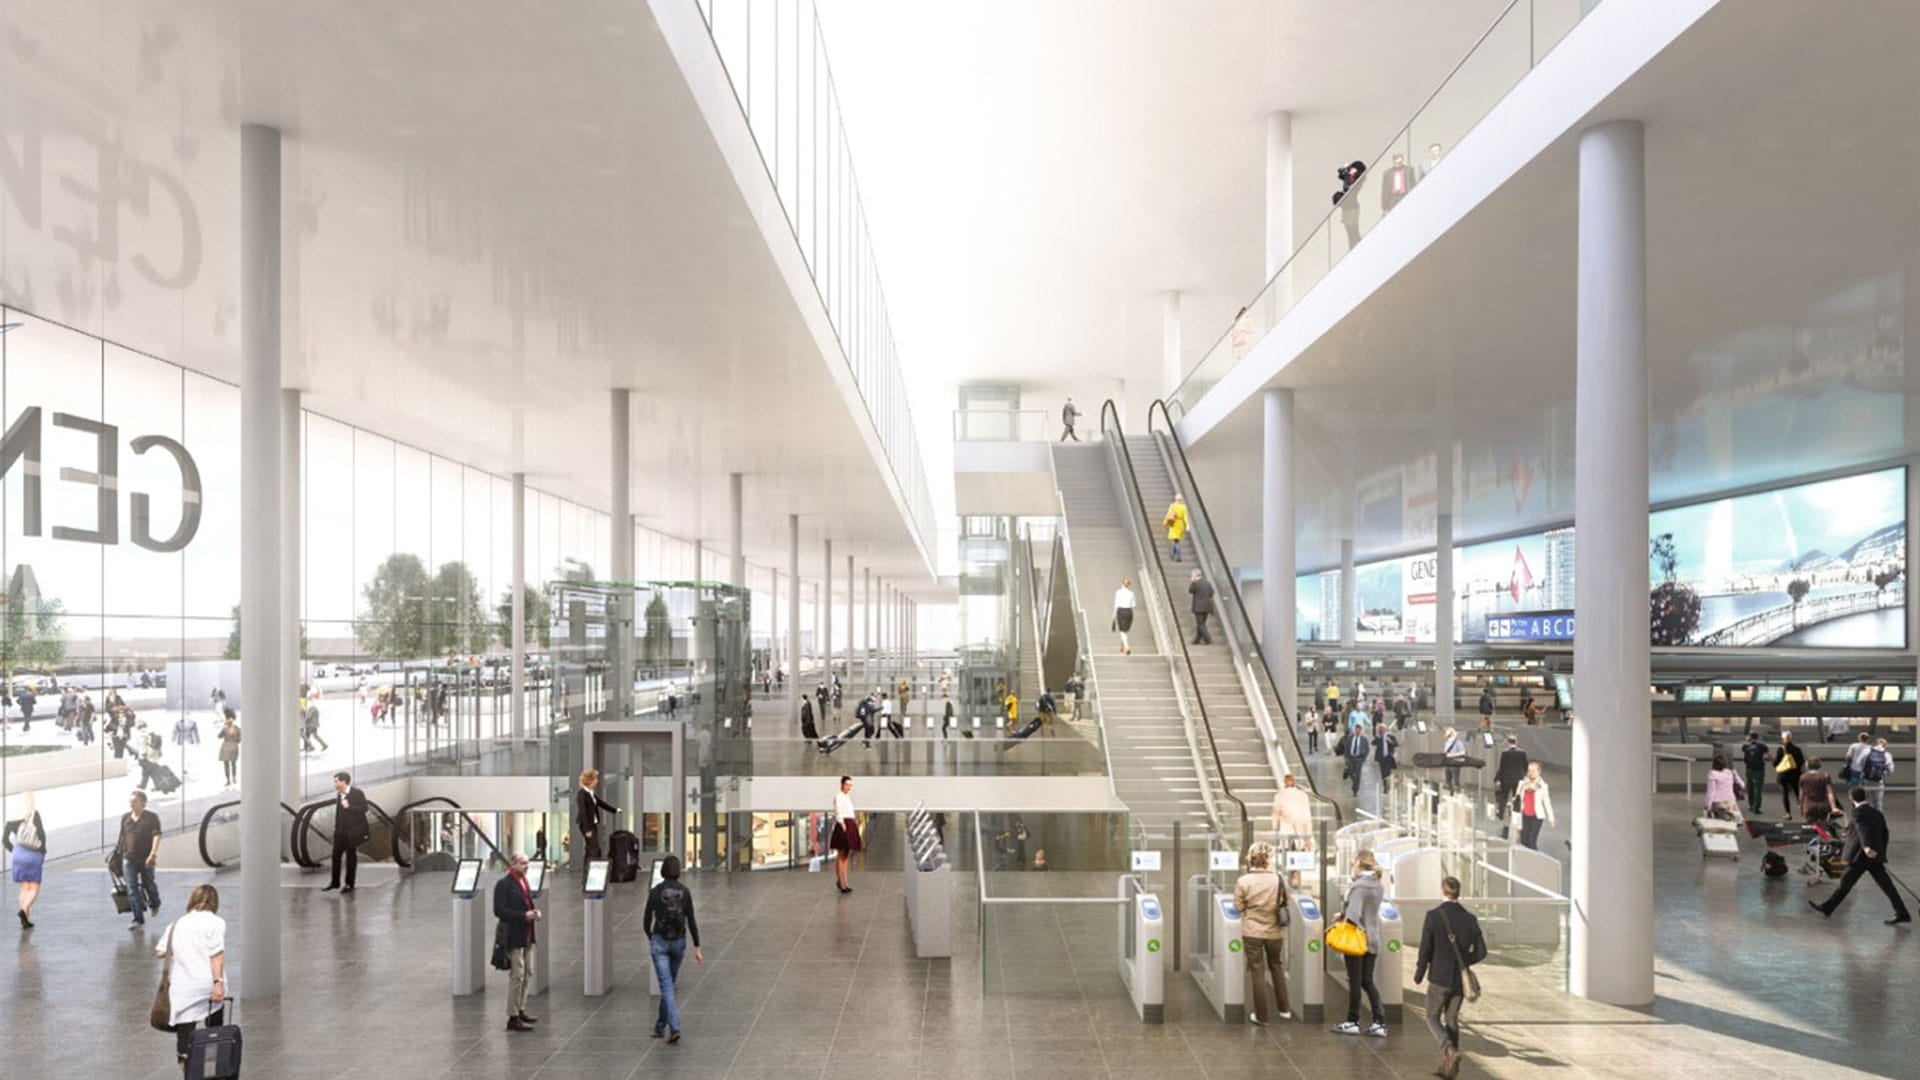 Optimizing terminal assets to create a world class intermodal hub at Geneva-Airport